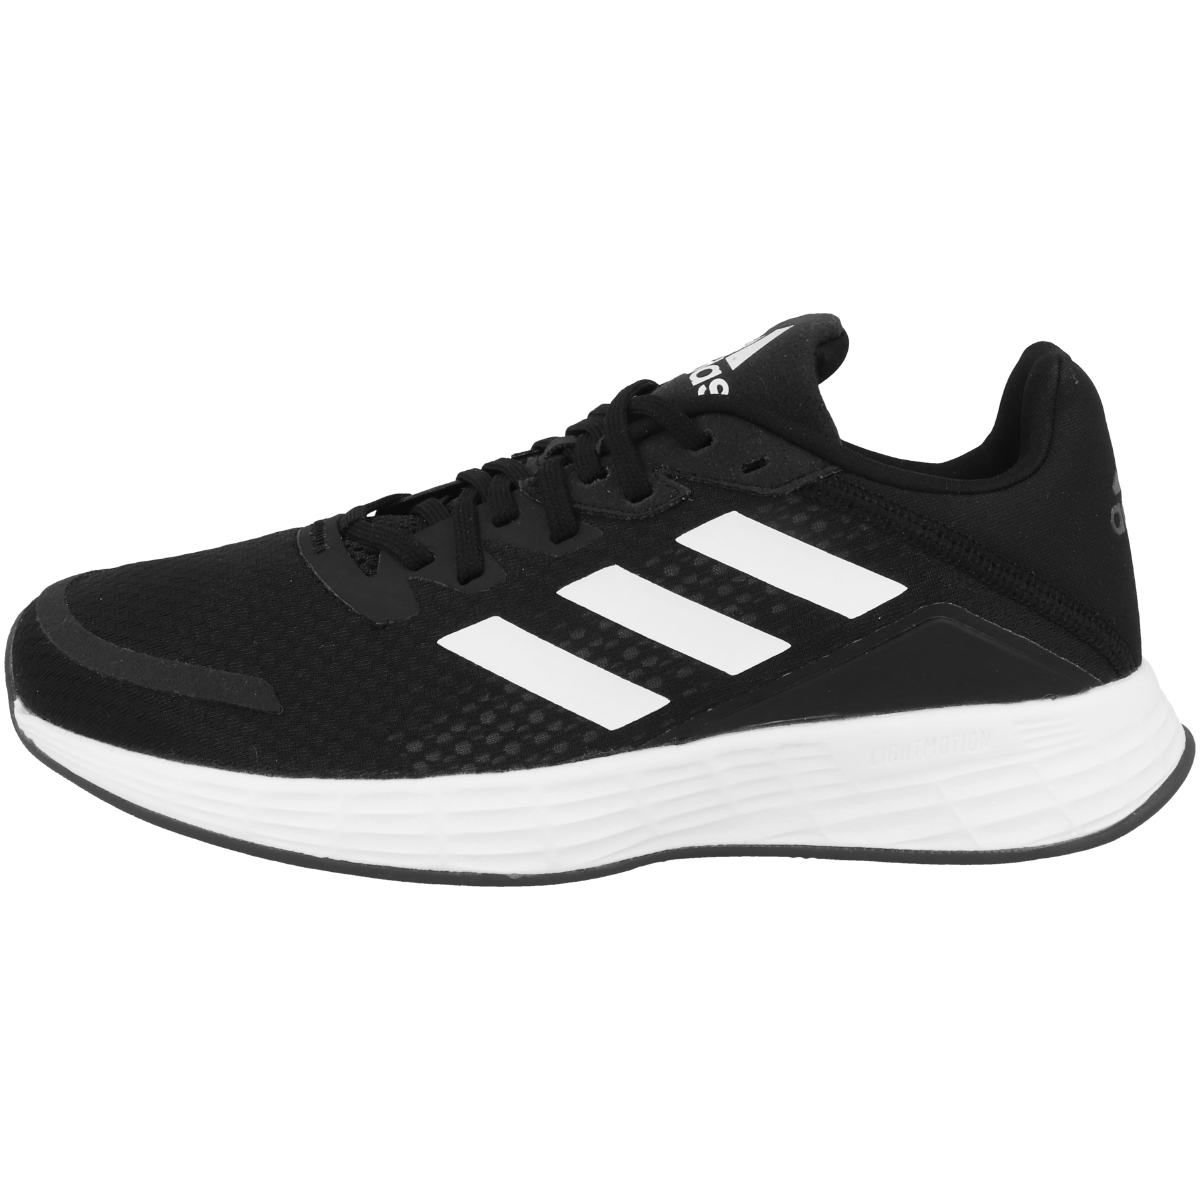 Adidas Duramo SL K Laufschuhe schwarz